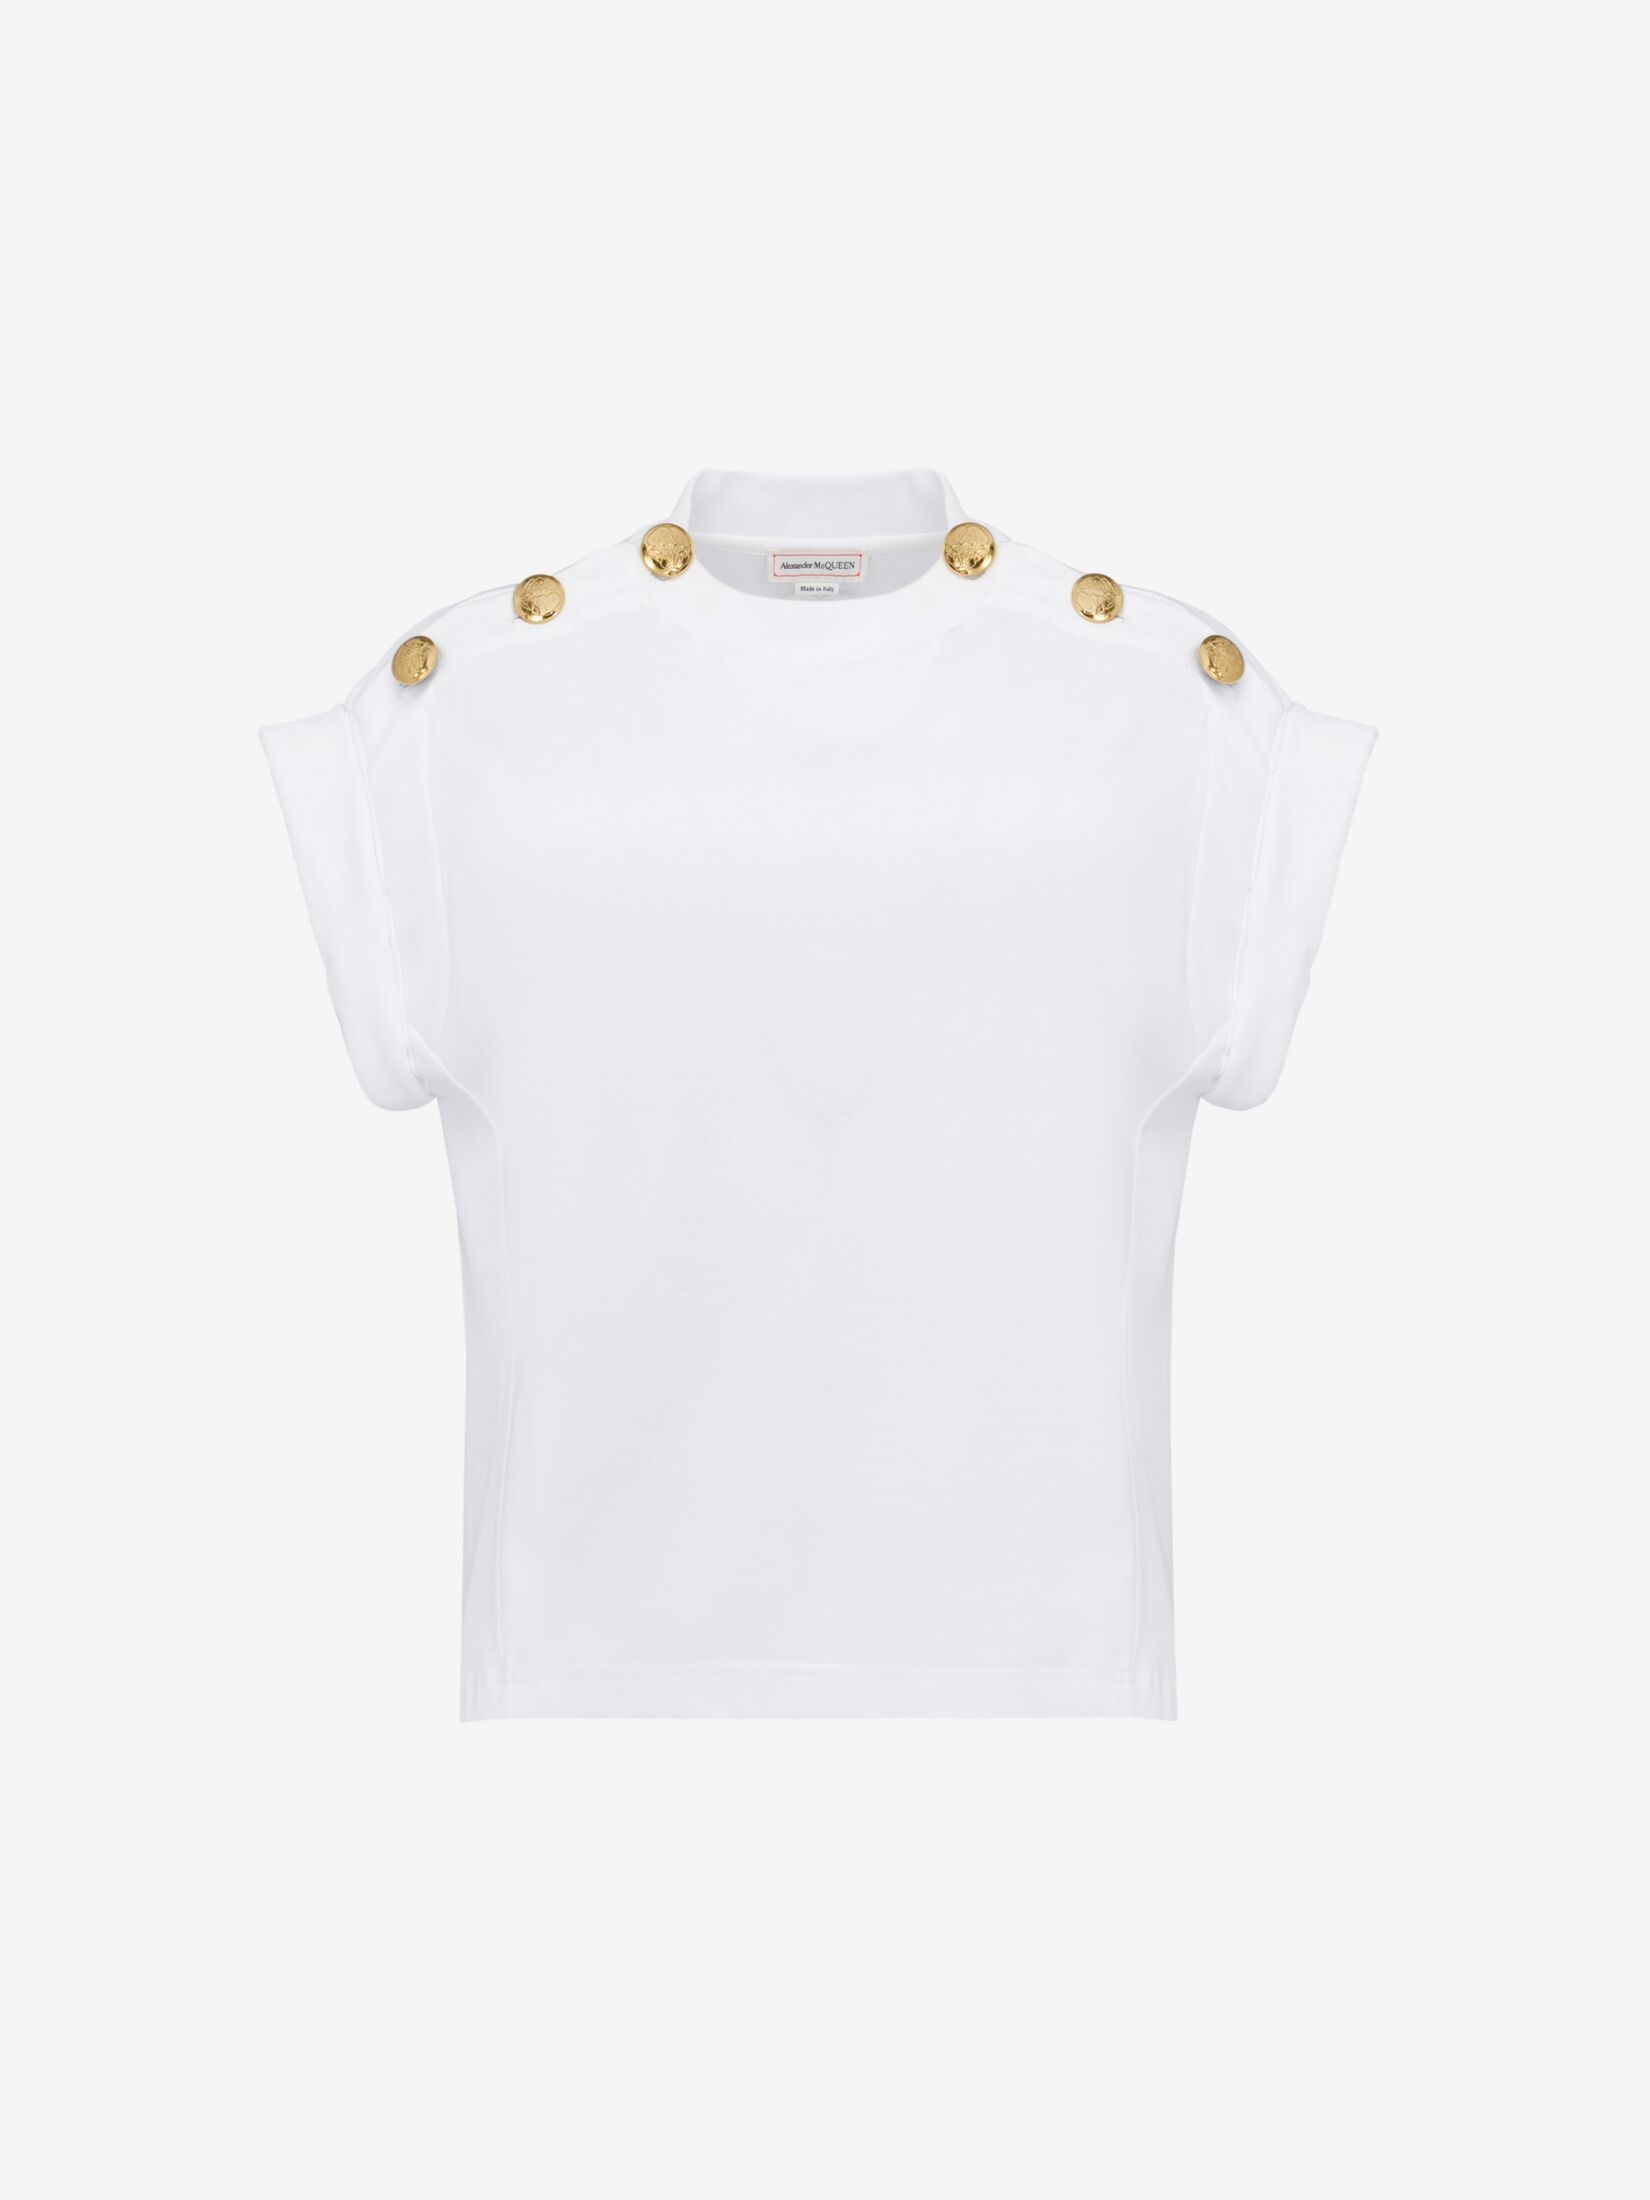 Women's Seal Button T-shirt in White - 1